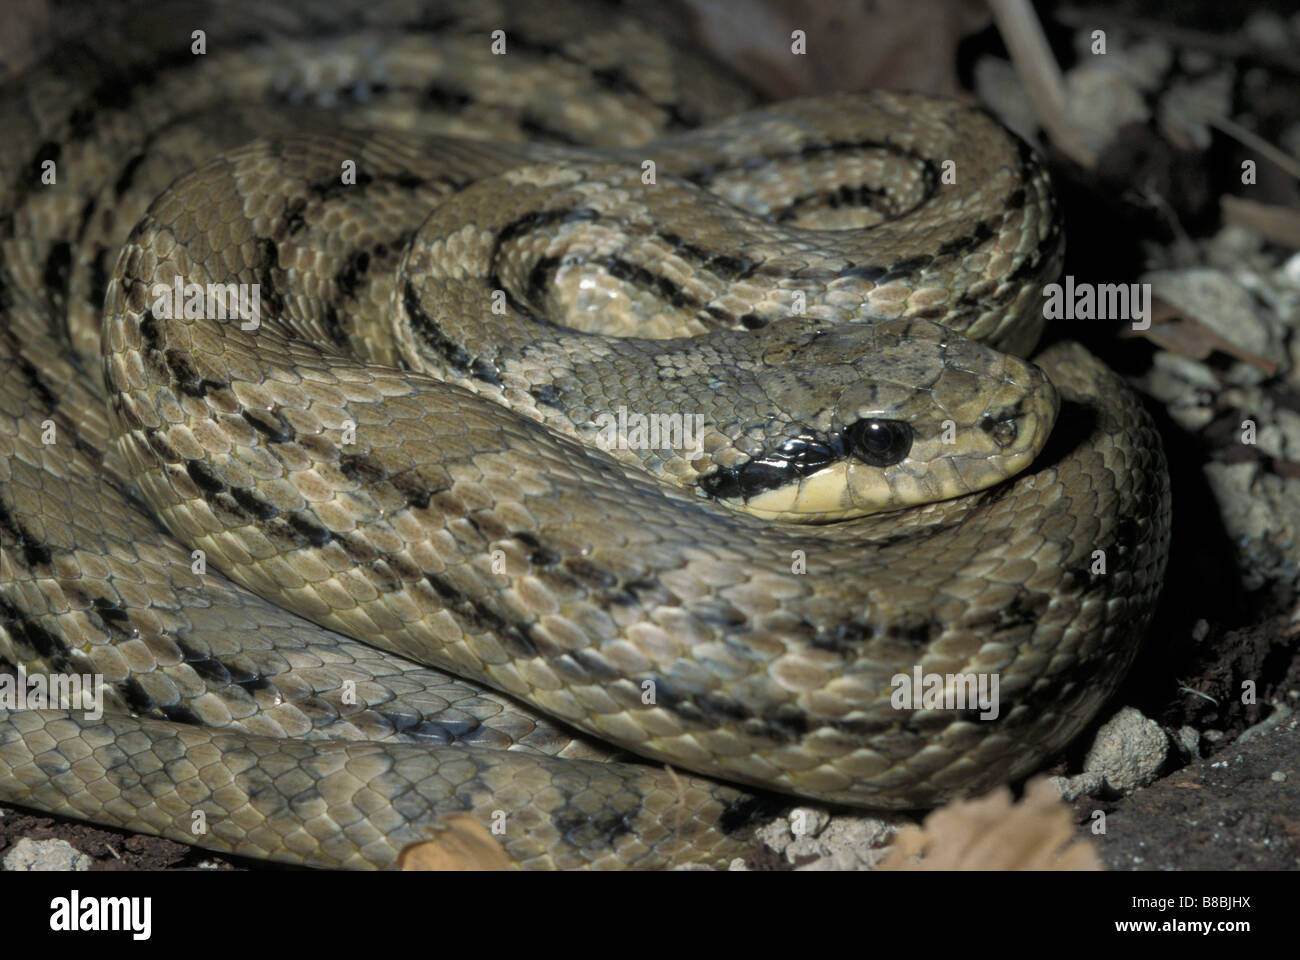 Four lined Snake, Elaphe quatuorlineata, cervone, Colubridae, Italy Stock Photo